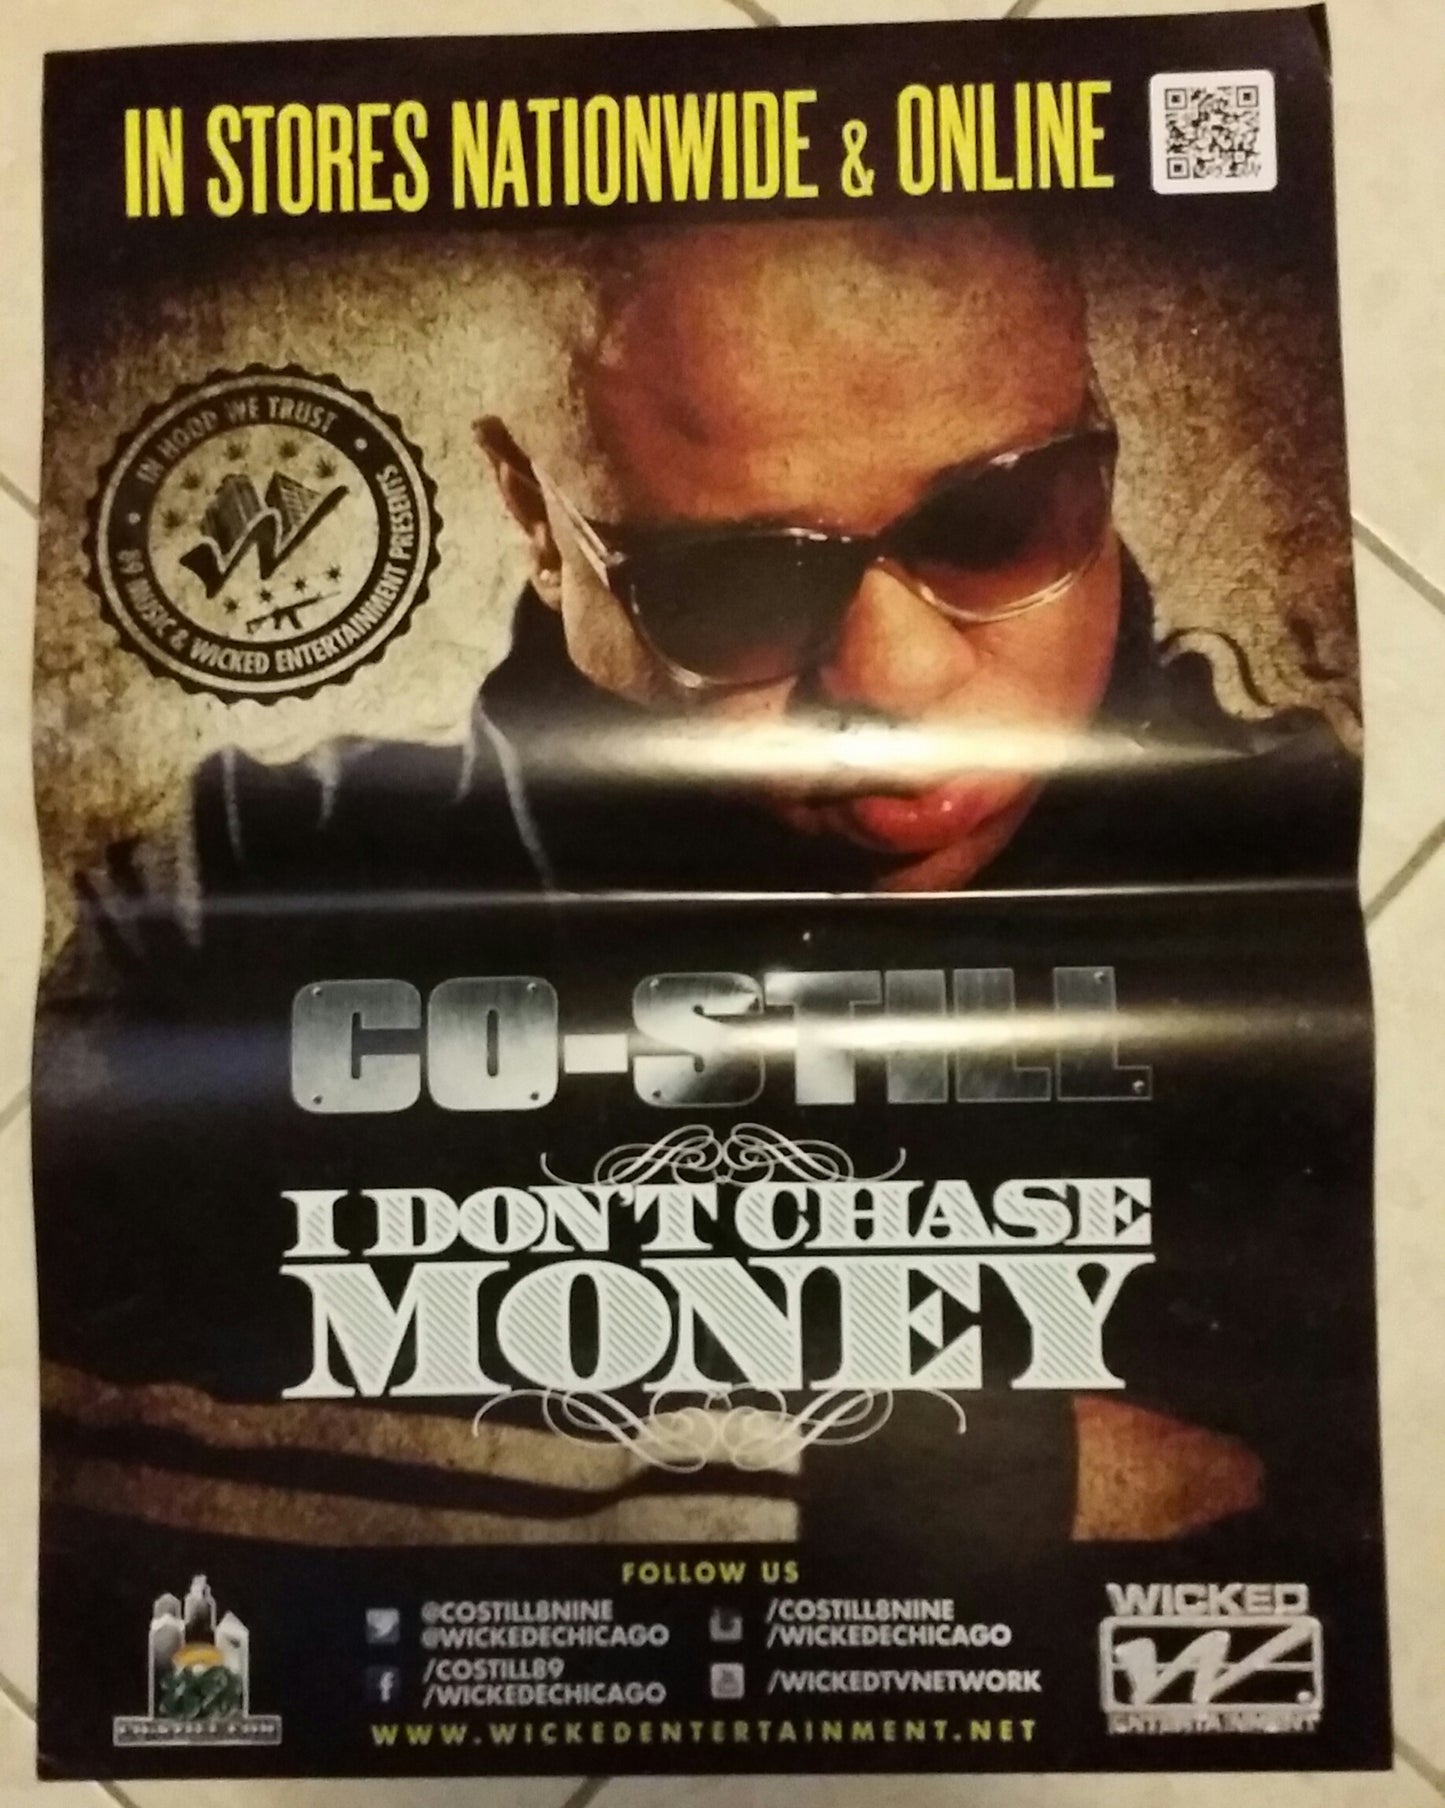 Co-Still - I Don't Chase Money | Poster 18x24